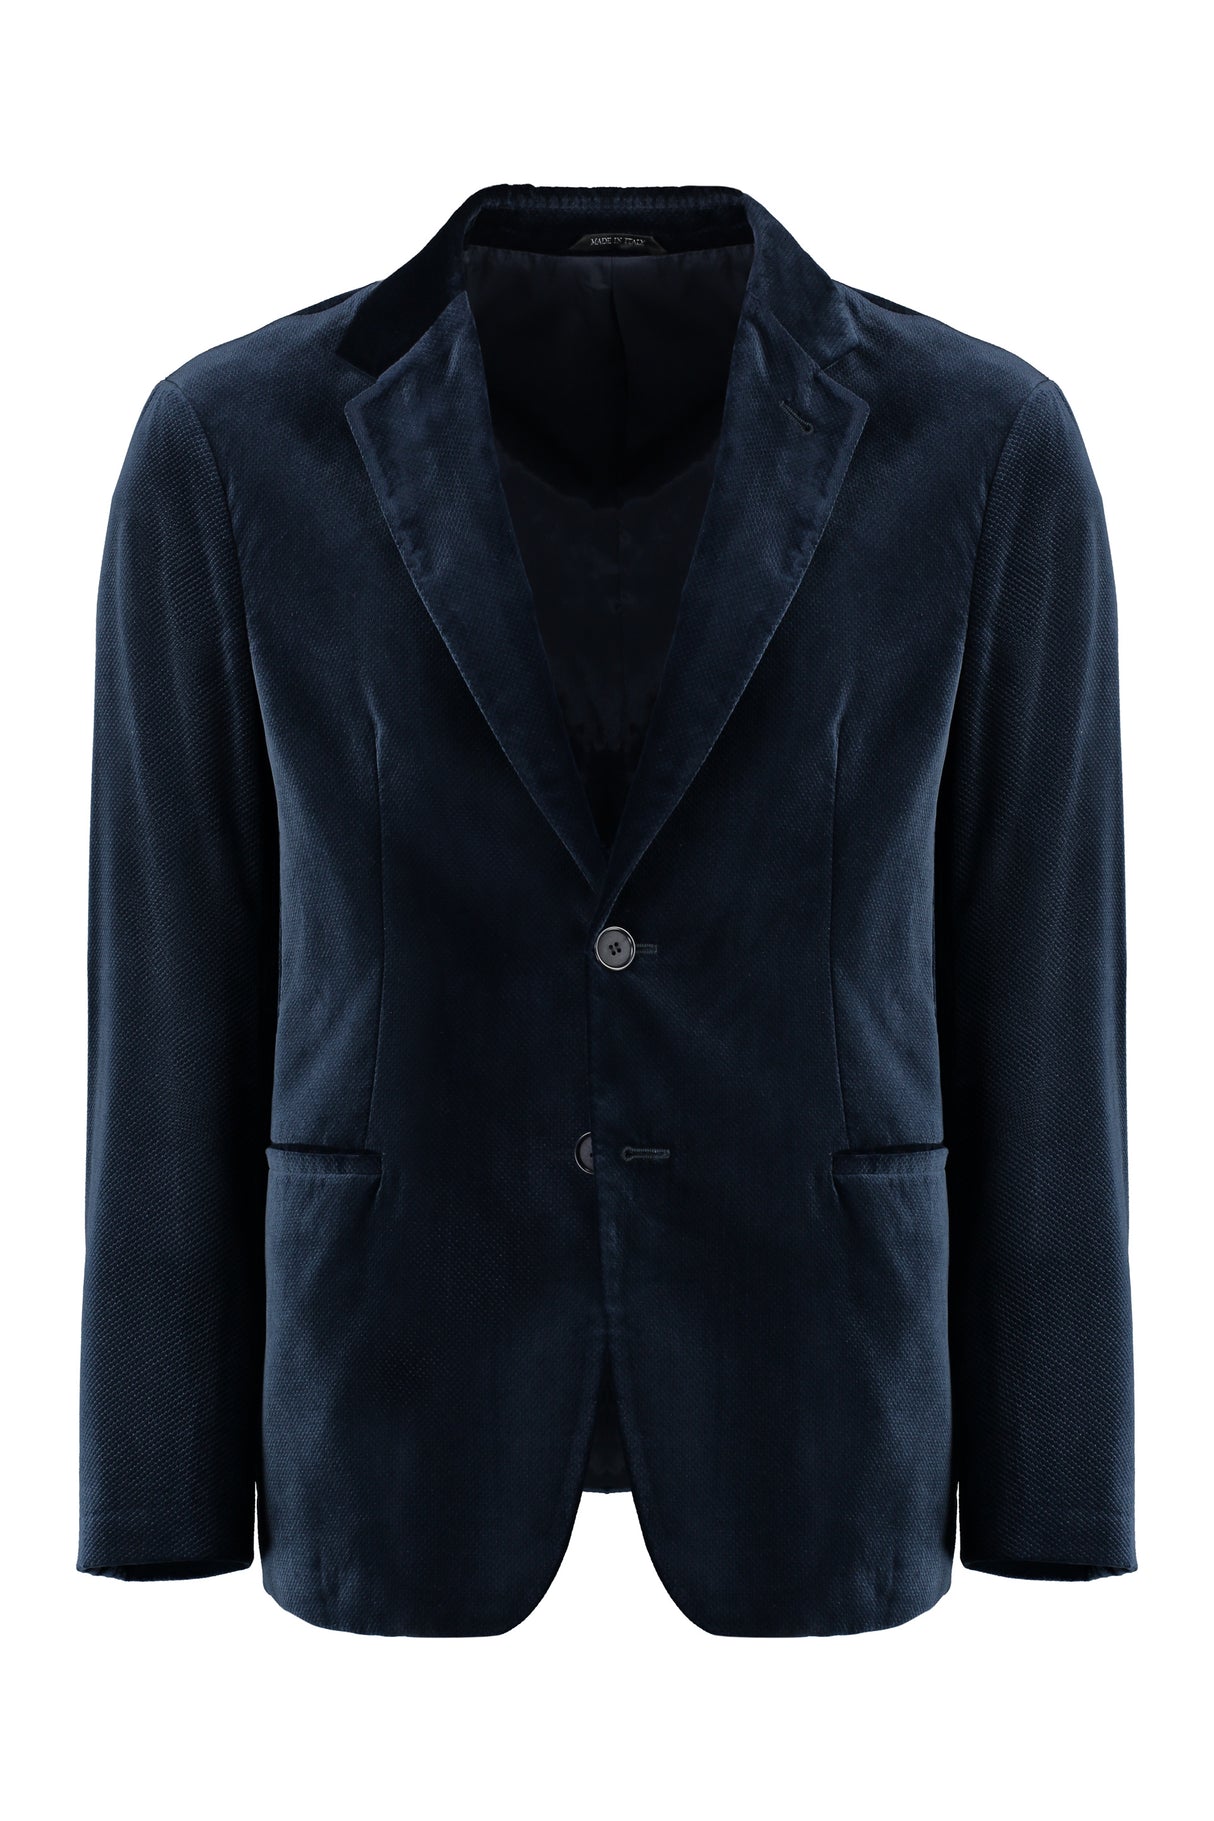 GIORGIO ARMANI Blue Velvet Single-Breasted Jacket for Men